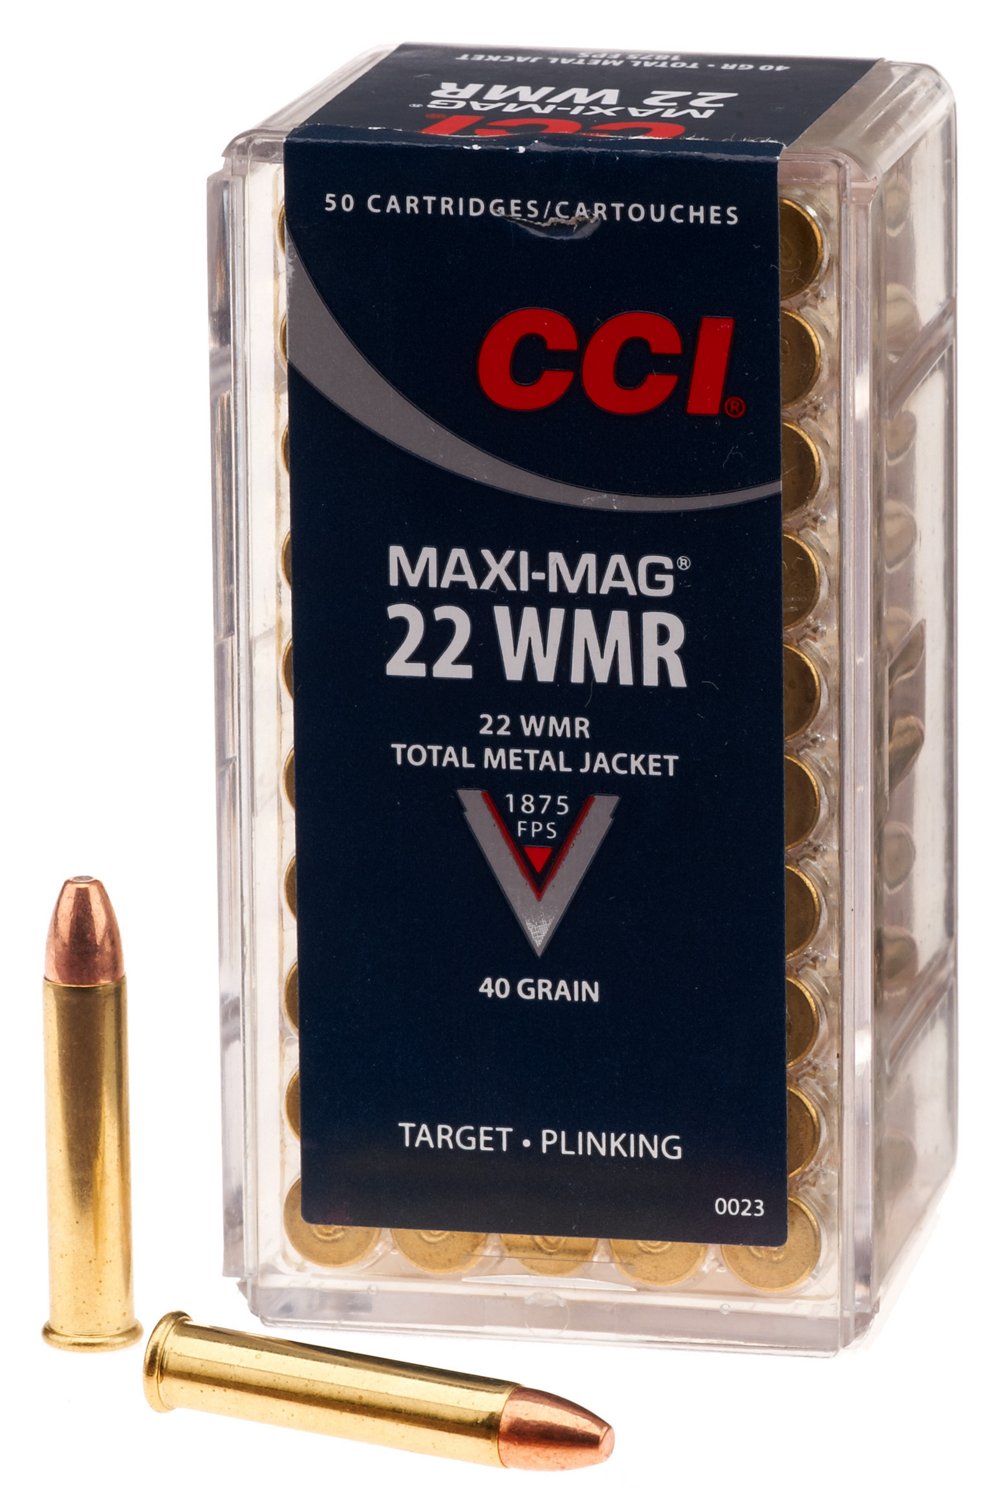 Cci 22 Wmr Maxi Mag 40 Grain Rimfire Ammunition 50 Rounds Academy